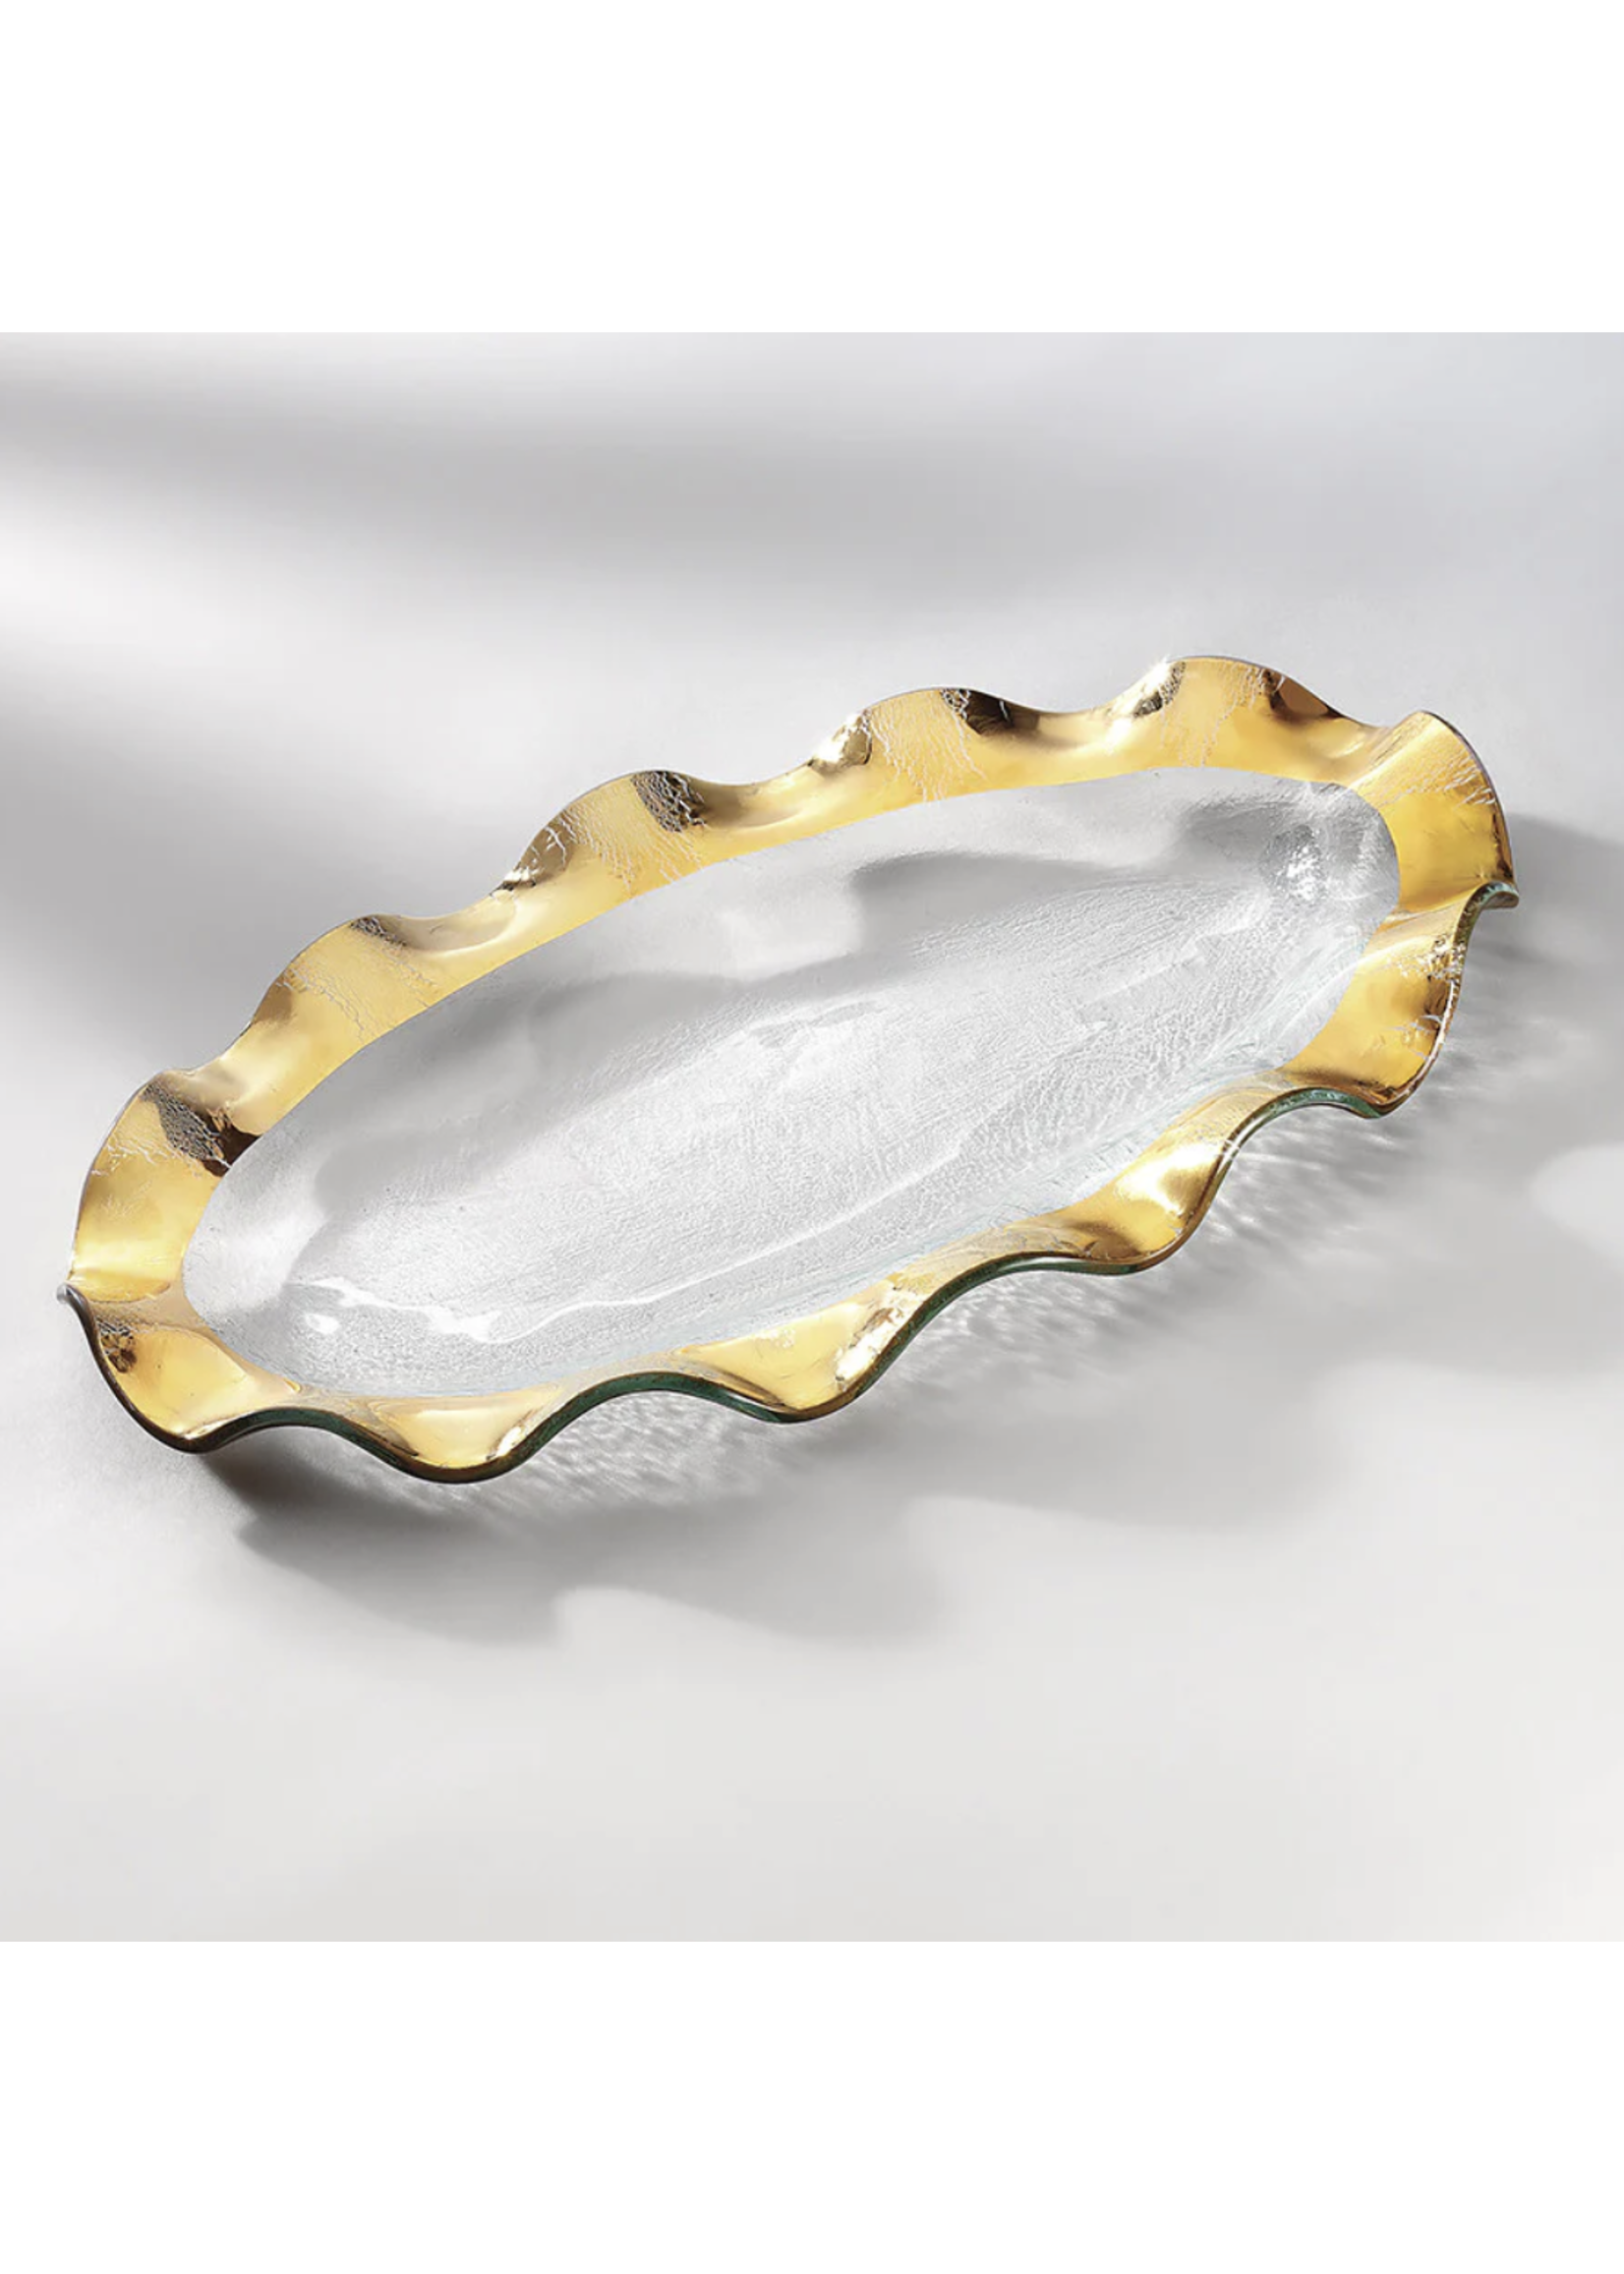 Annie Glass Ruffle Oval Platter